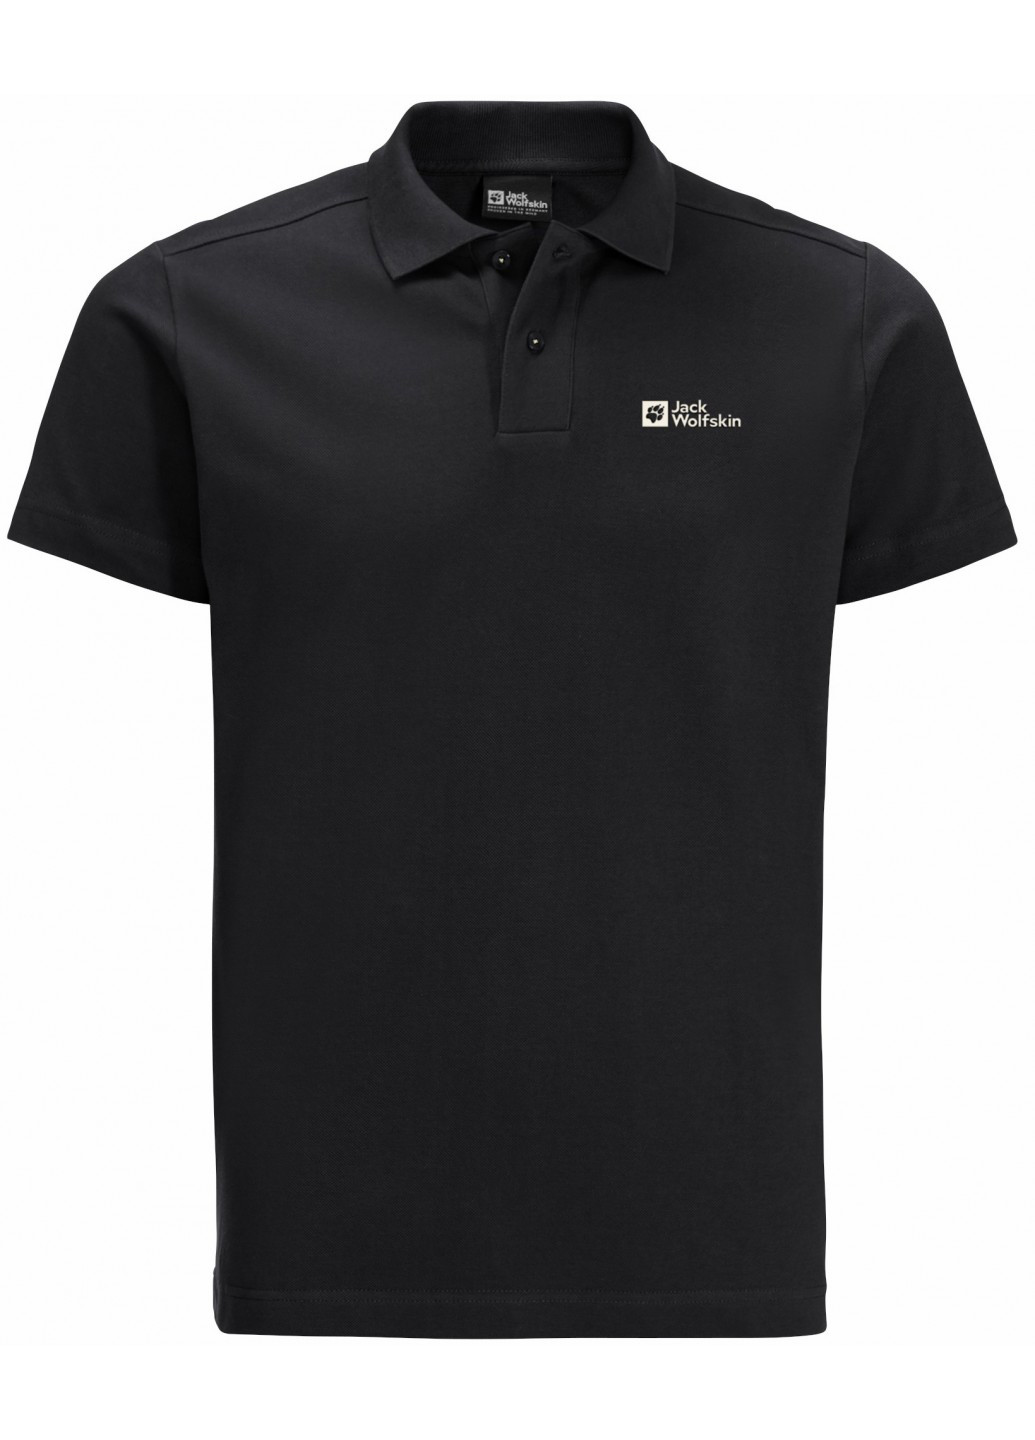 Черная футболка-поло для мужчин Jack Wolfskin с логотипом